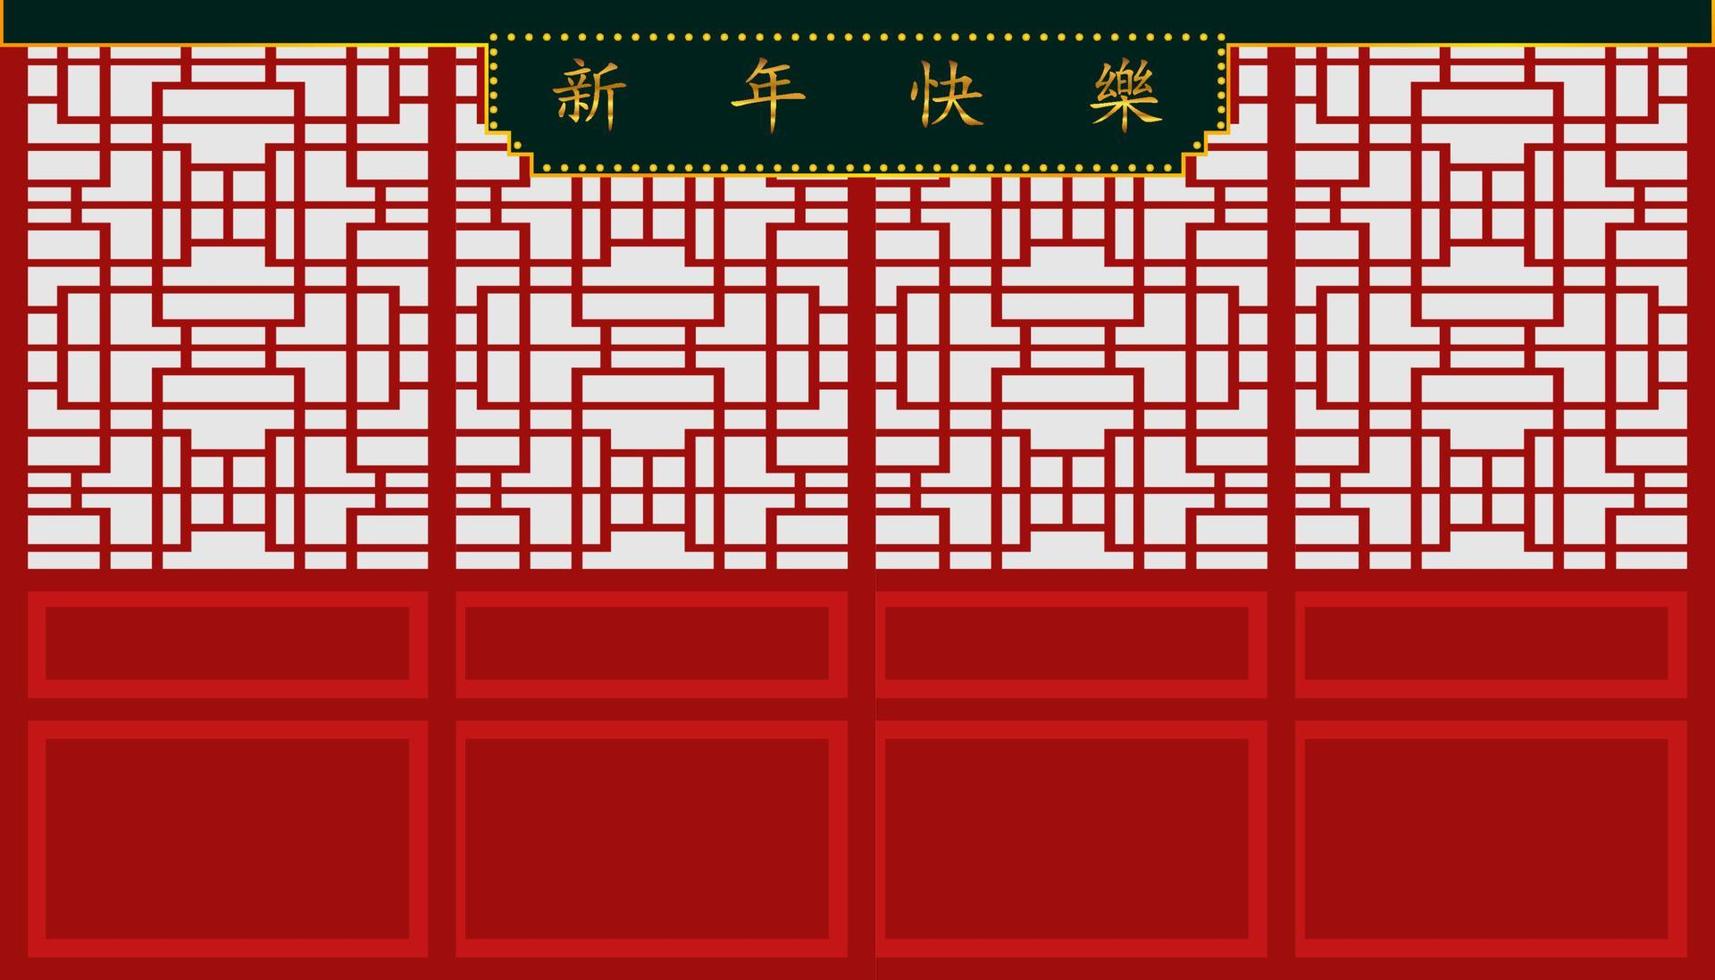 gelukkig chinees nieuwjaar. teken van xin nian kual le karakters voor cny festival en deur en muur mooi patroon. categorie vakantie. vector illustratie eps10